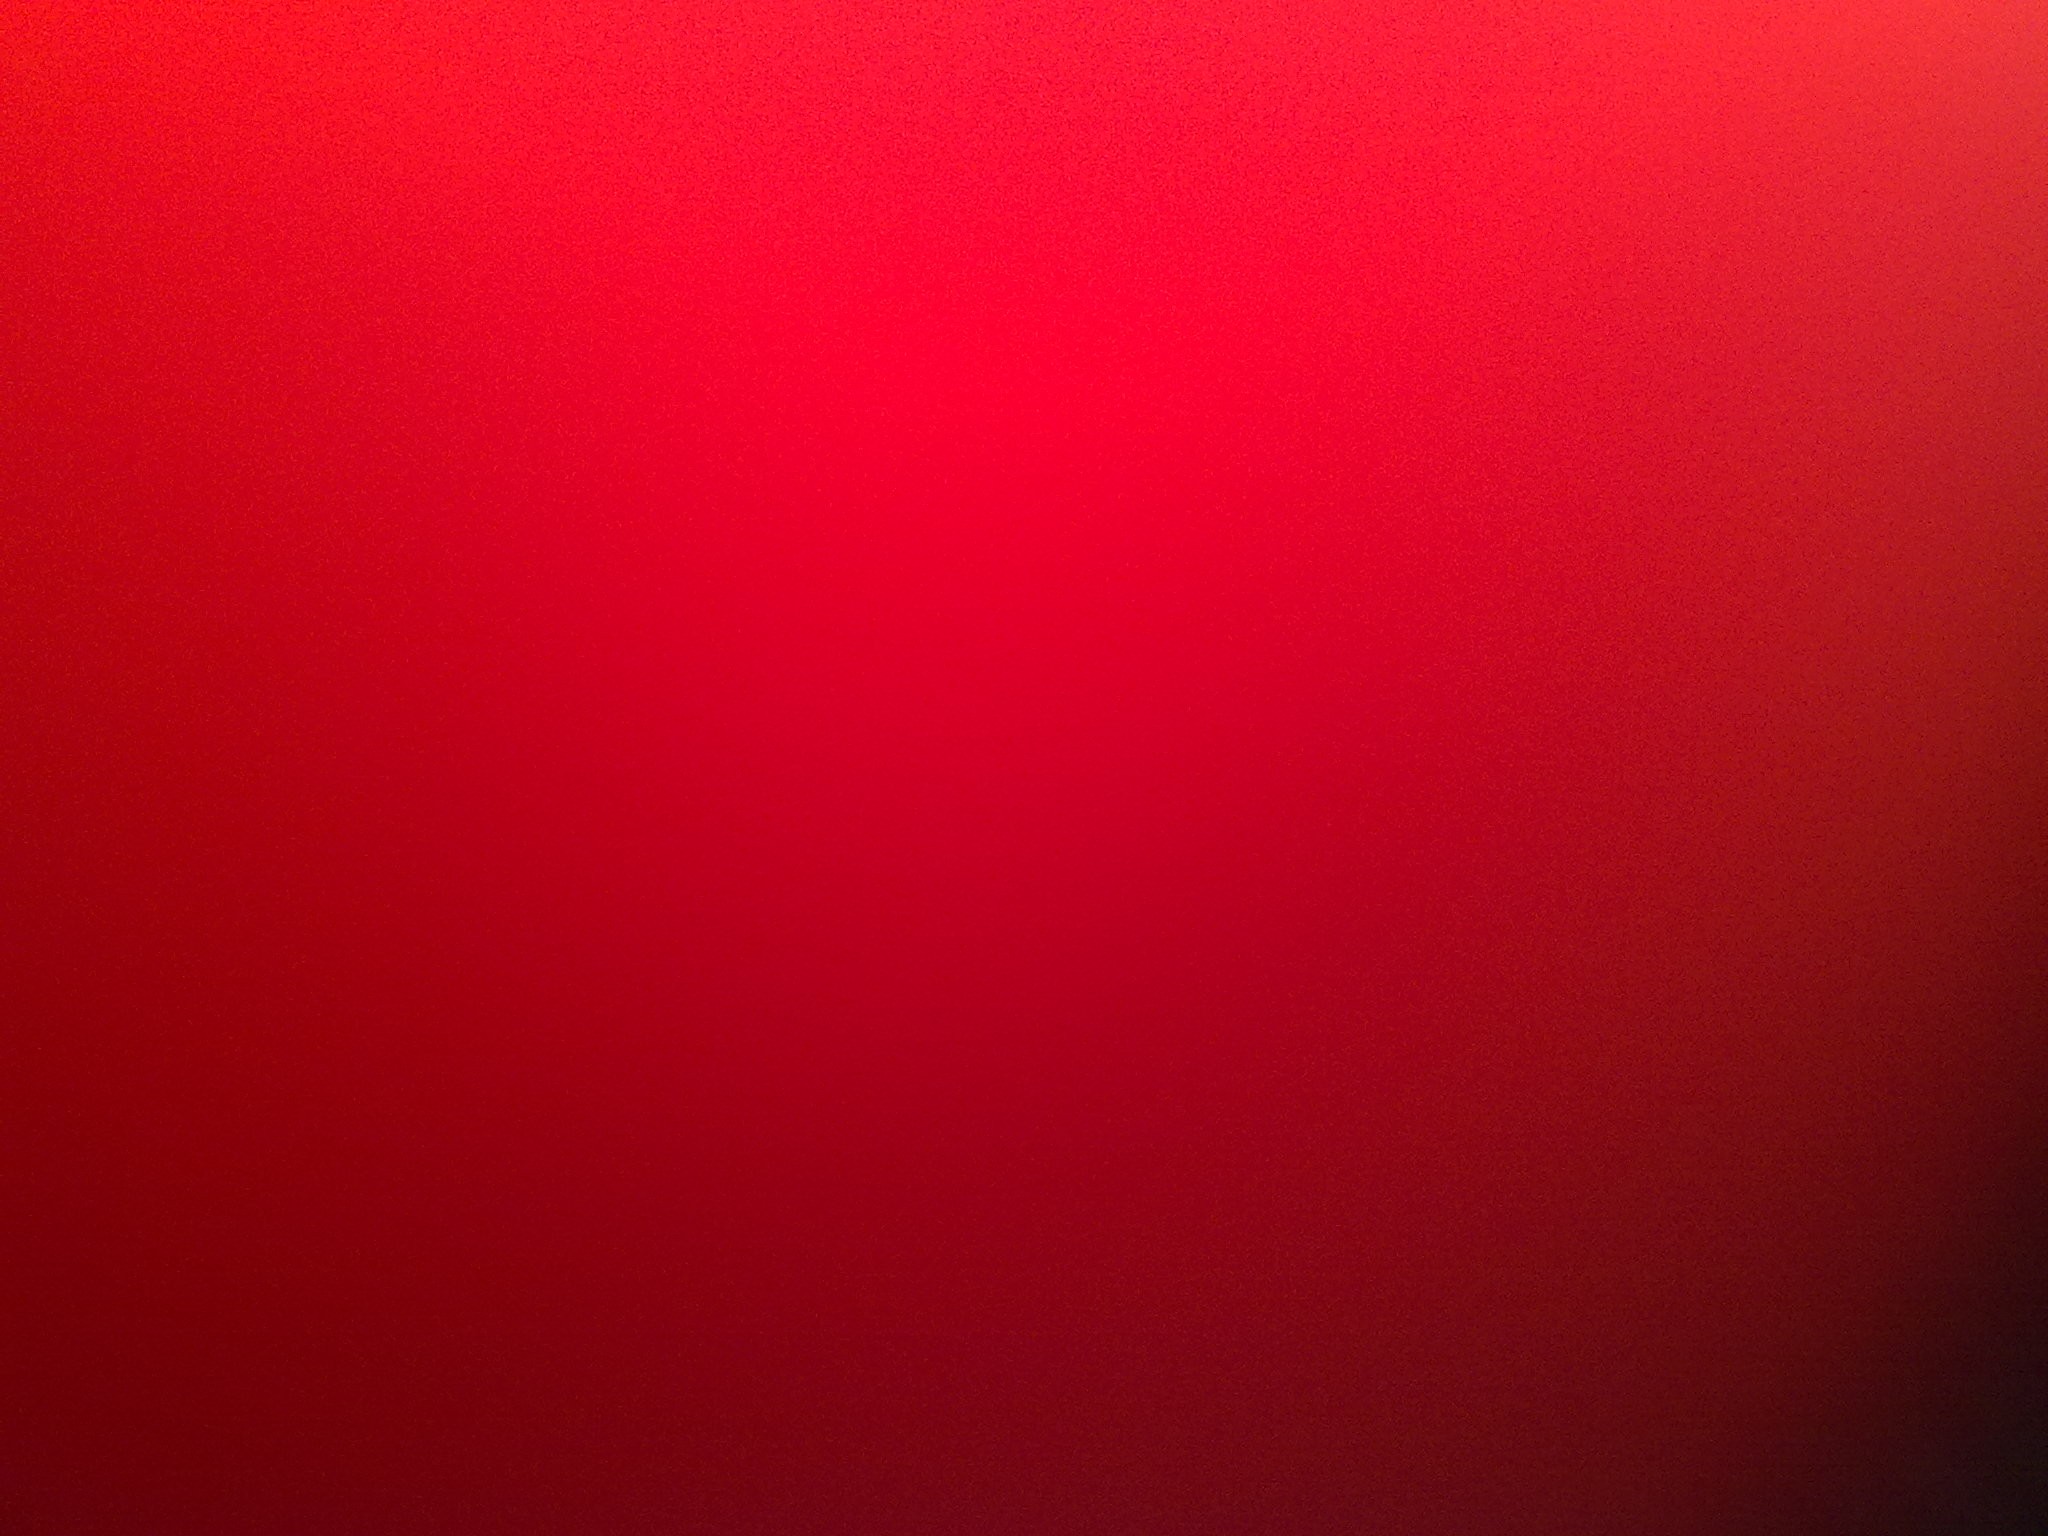 General 2048x1536 minimalism red background texture